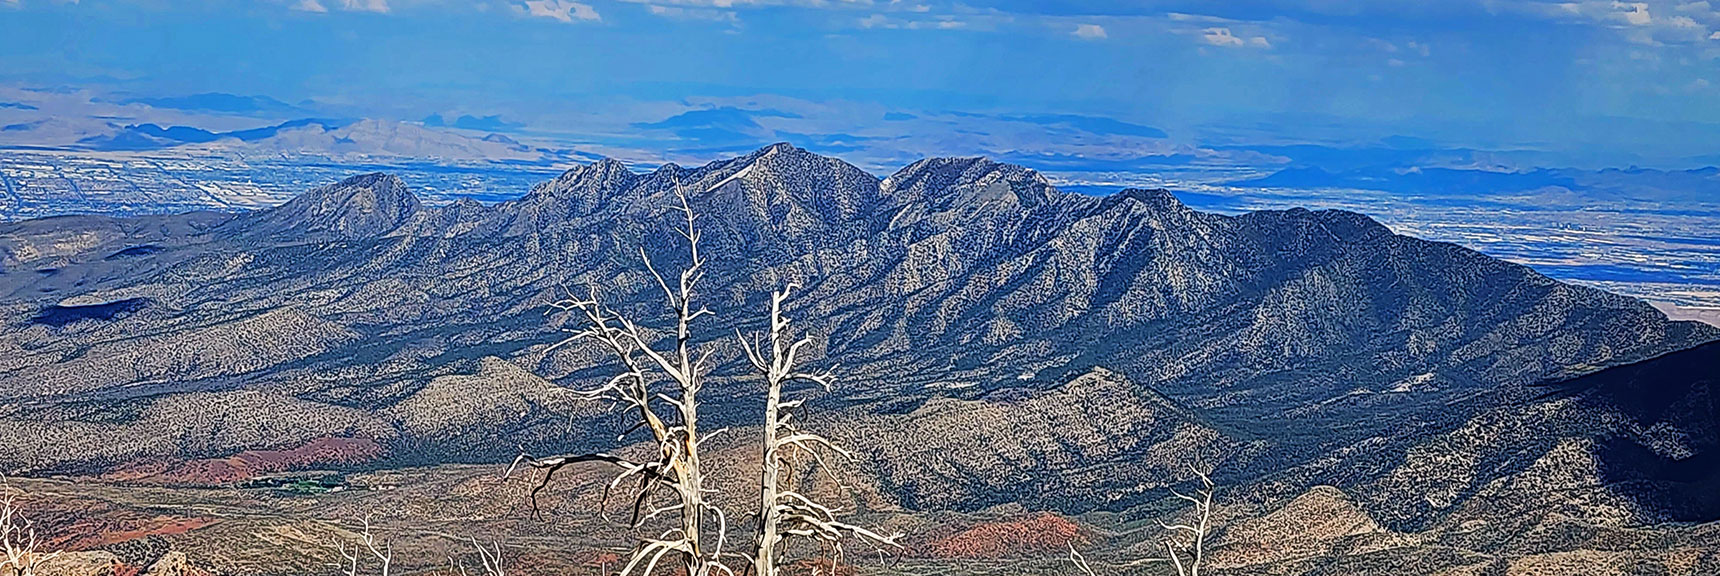 Higher View of La Madre Mts. from Harris Mt. False Summit | Harris Mountain Triangle | Mt Charleston Wilderness, Nevada